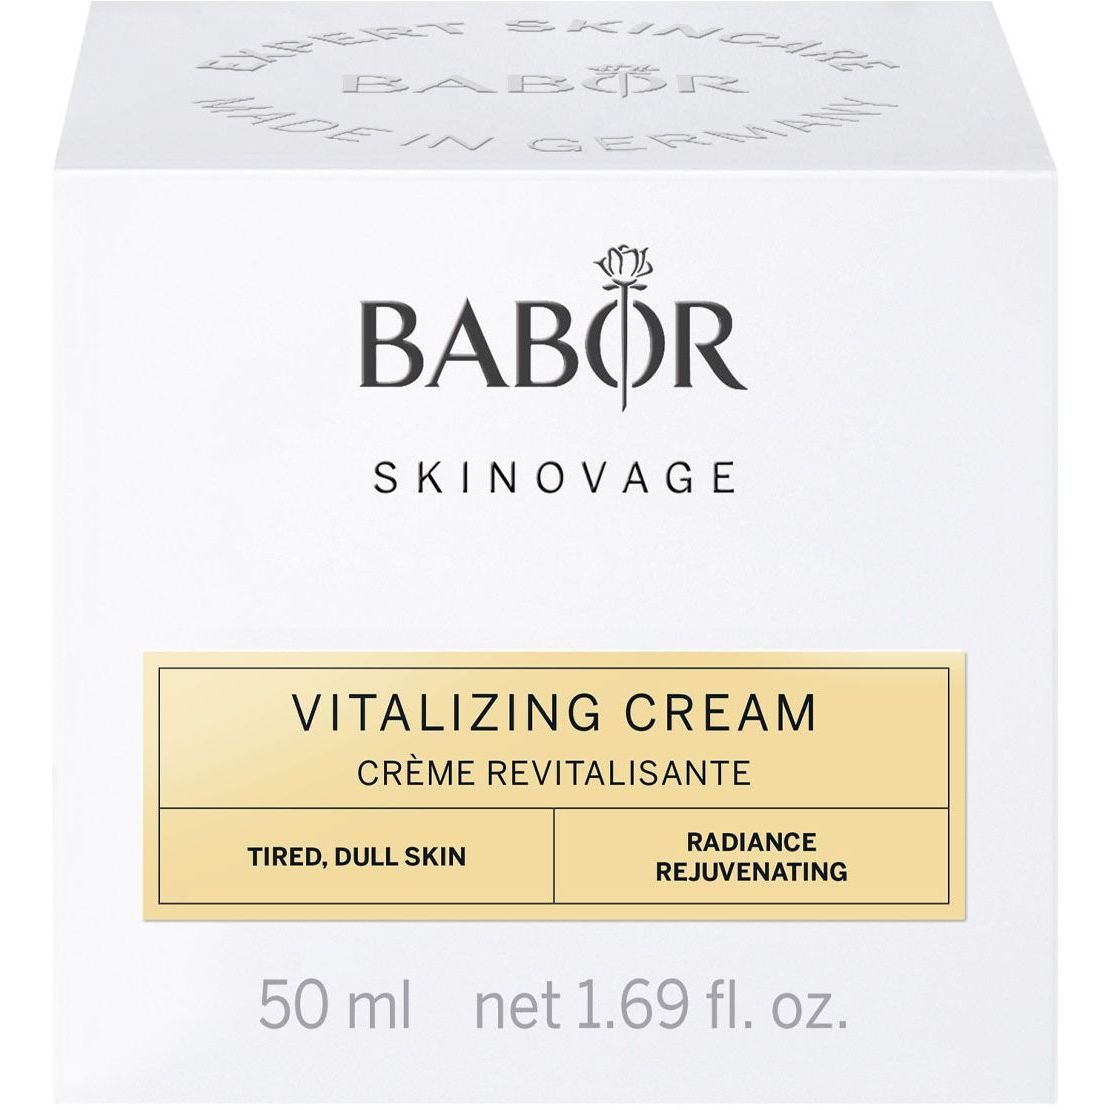 Крем для сияния кожи Babor Skinovage Vitalizing Cream 50 мл - фото 2